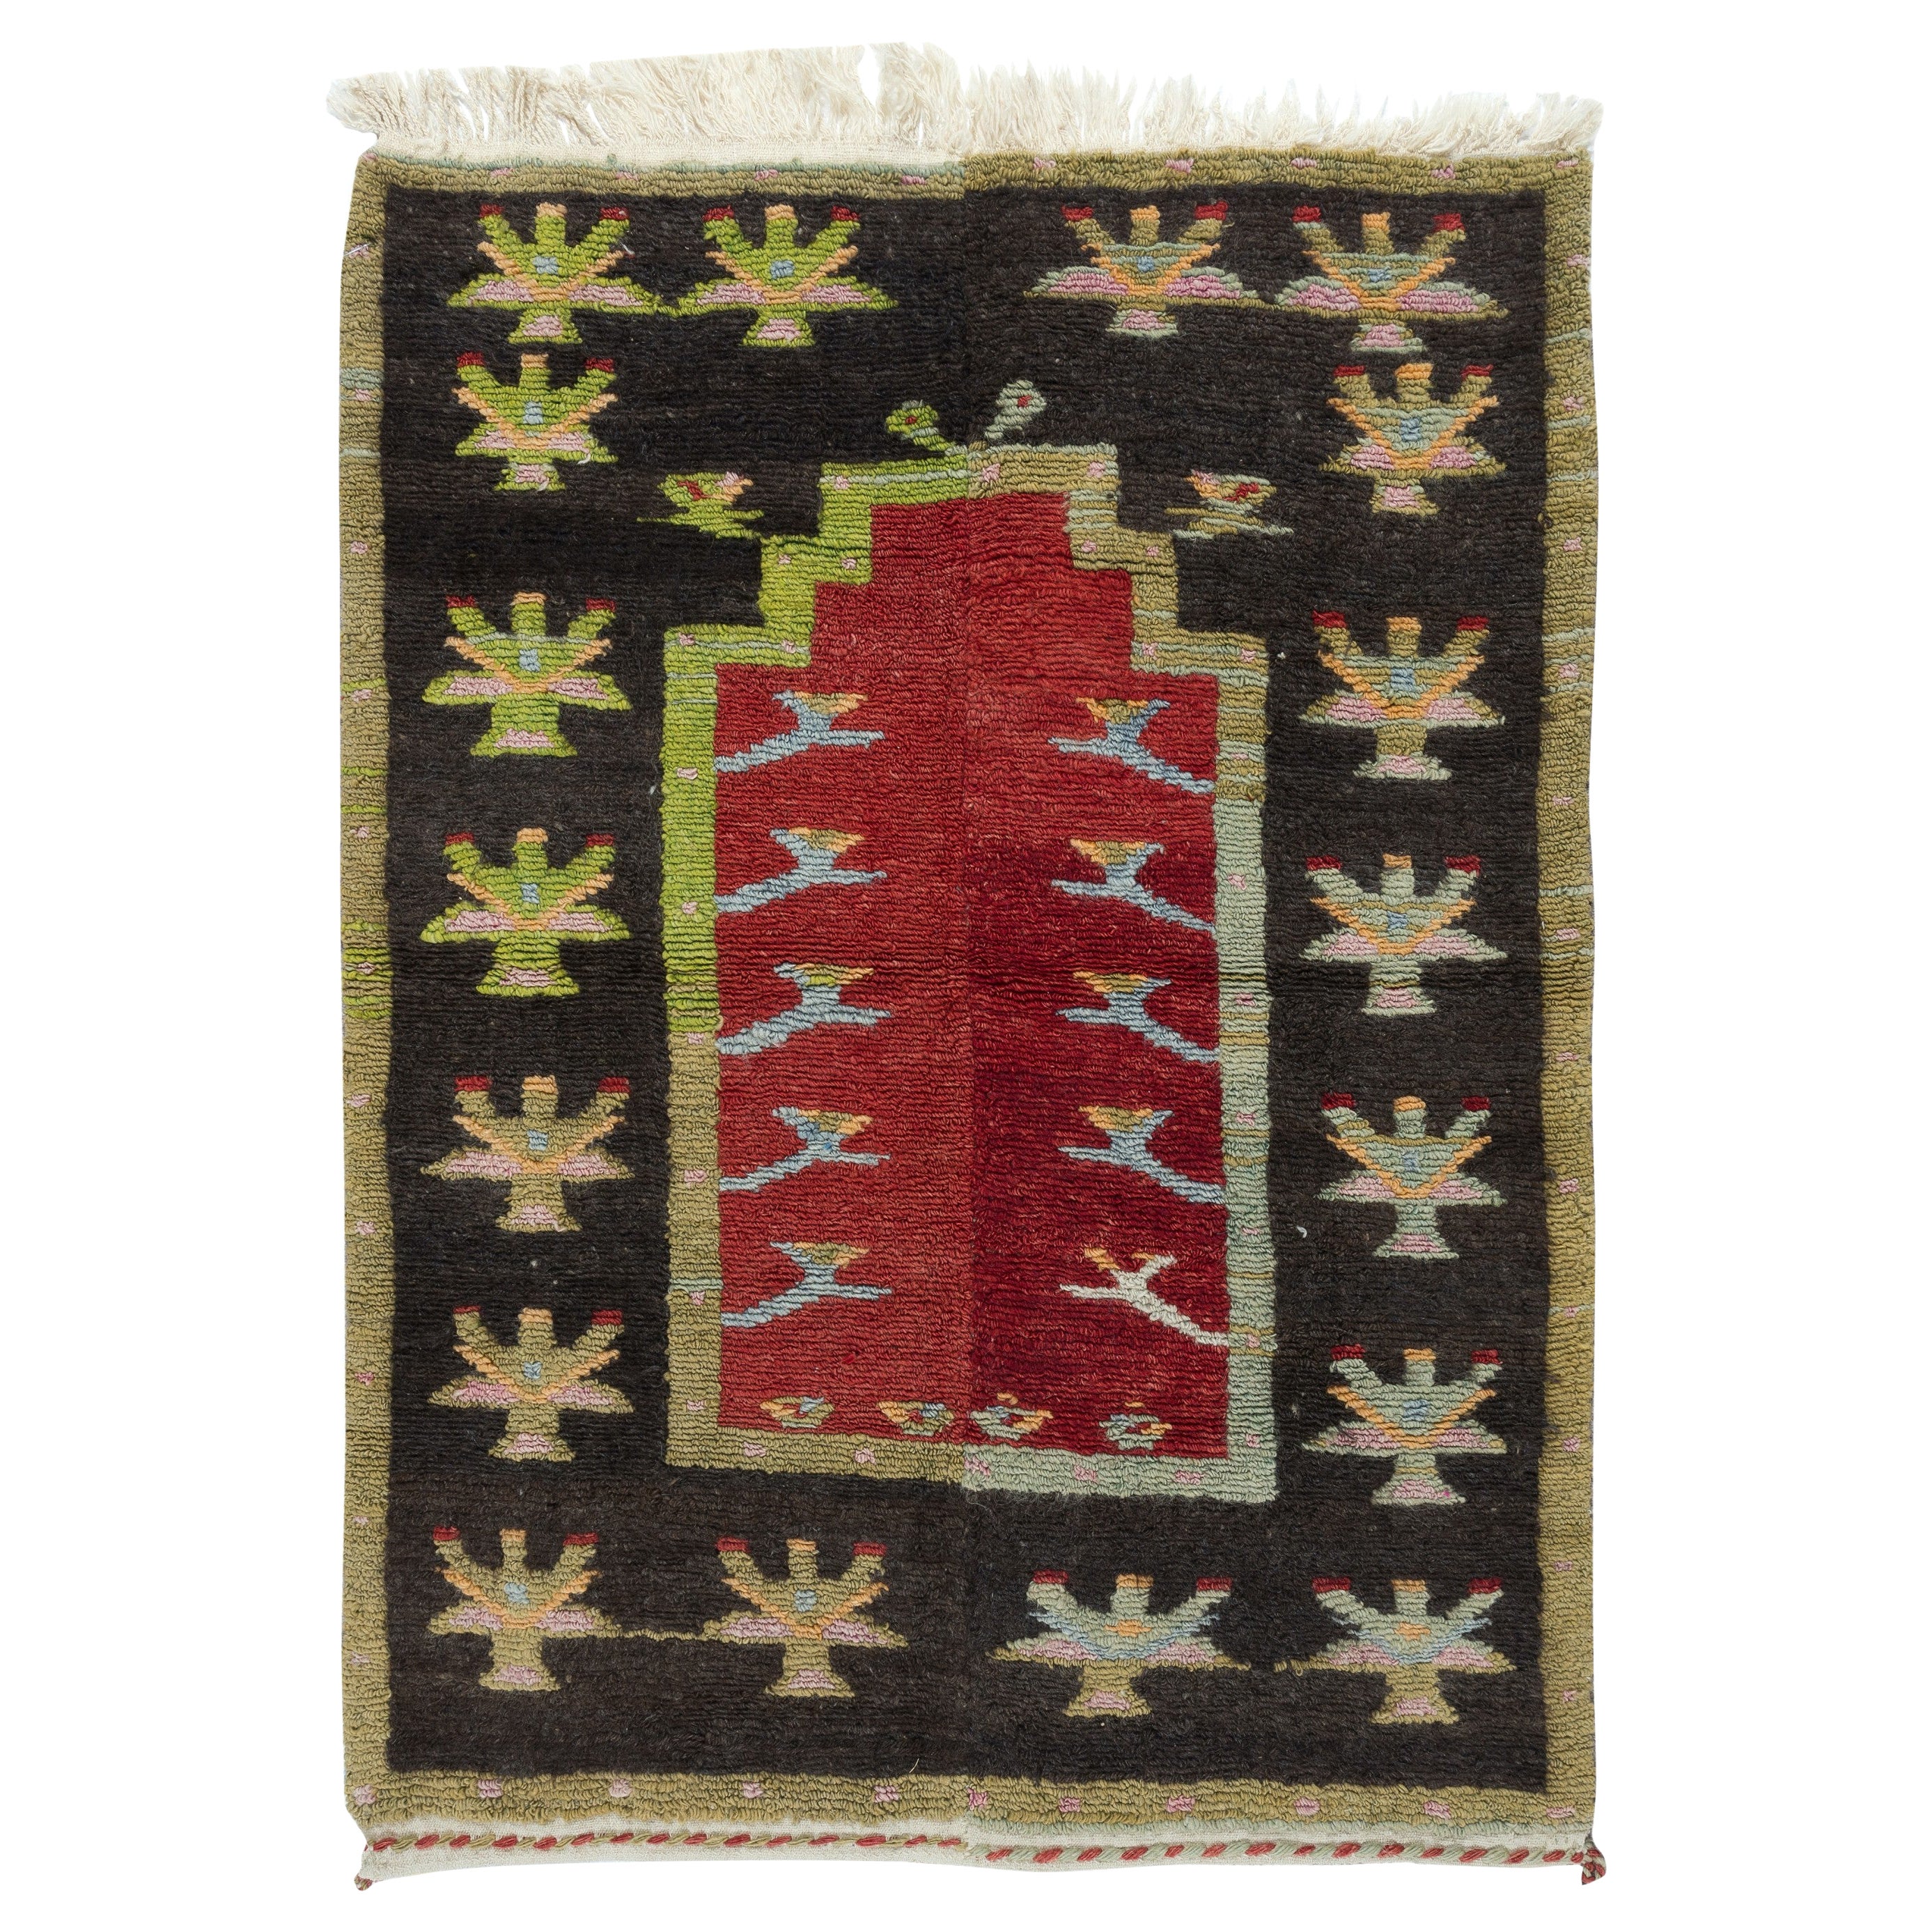 3.3x4.2 Ft Small Handmade Rug, Vintage Turkish Prayer Rug, Decorative Prayer Mat For Sale